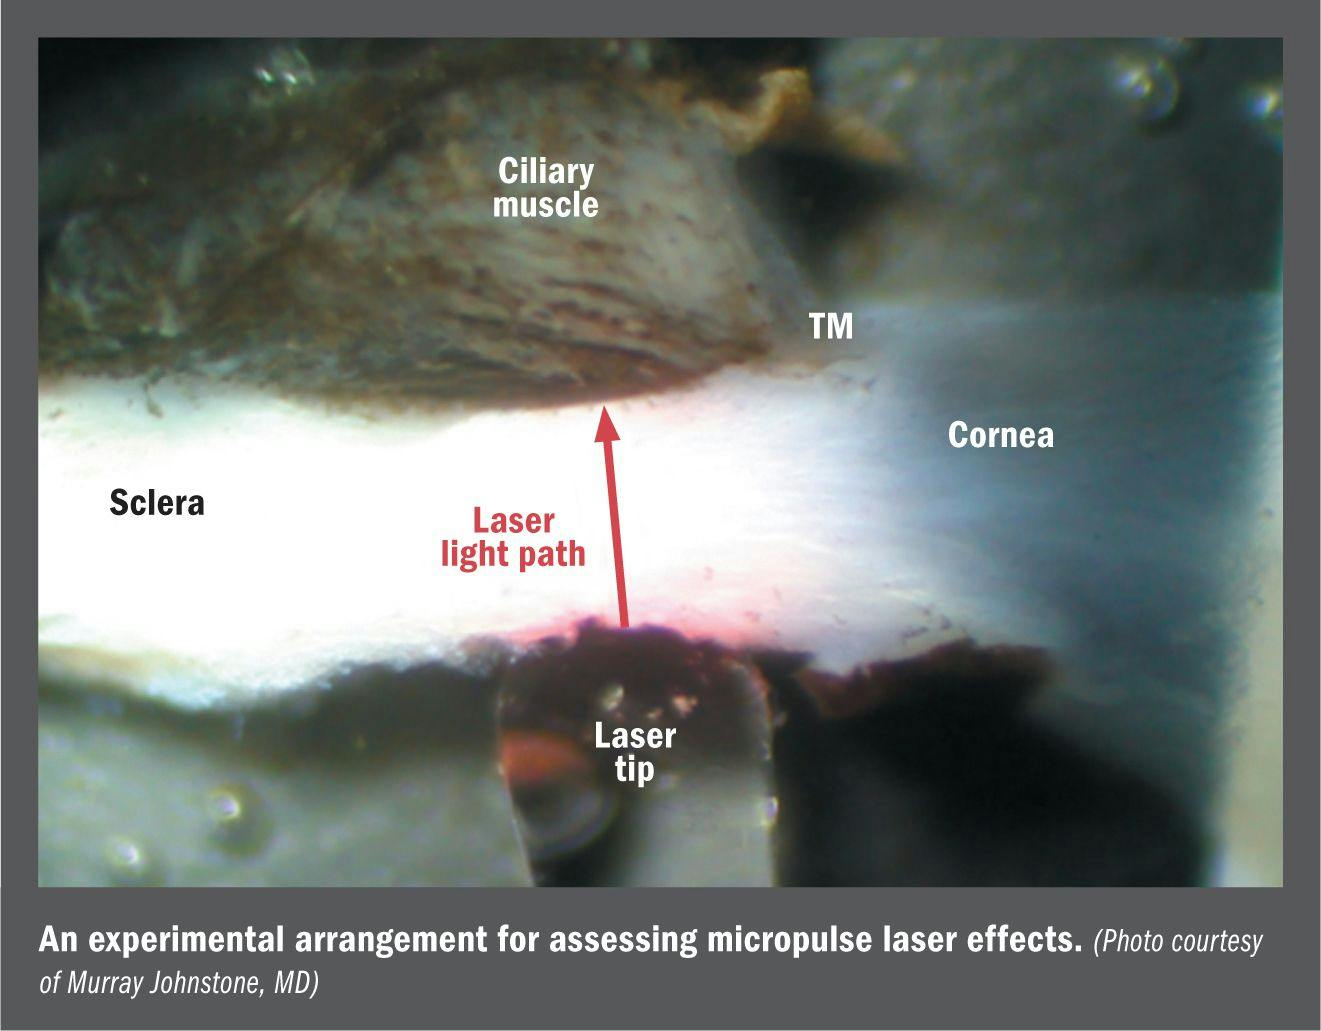 Micropulse laser may increase aqueous outflow